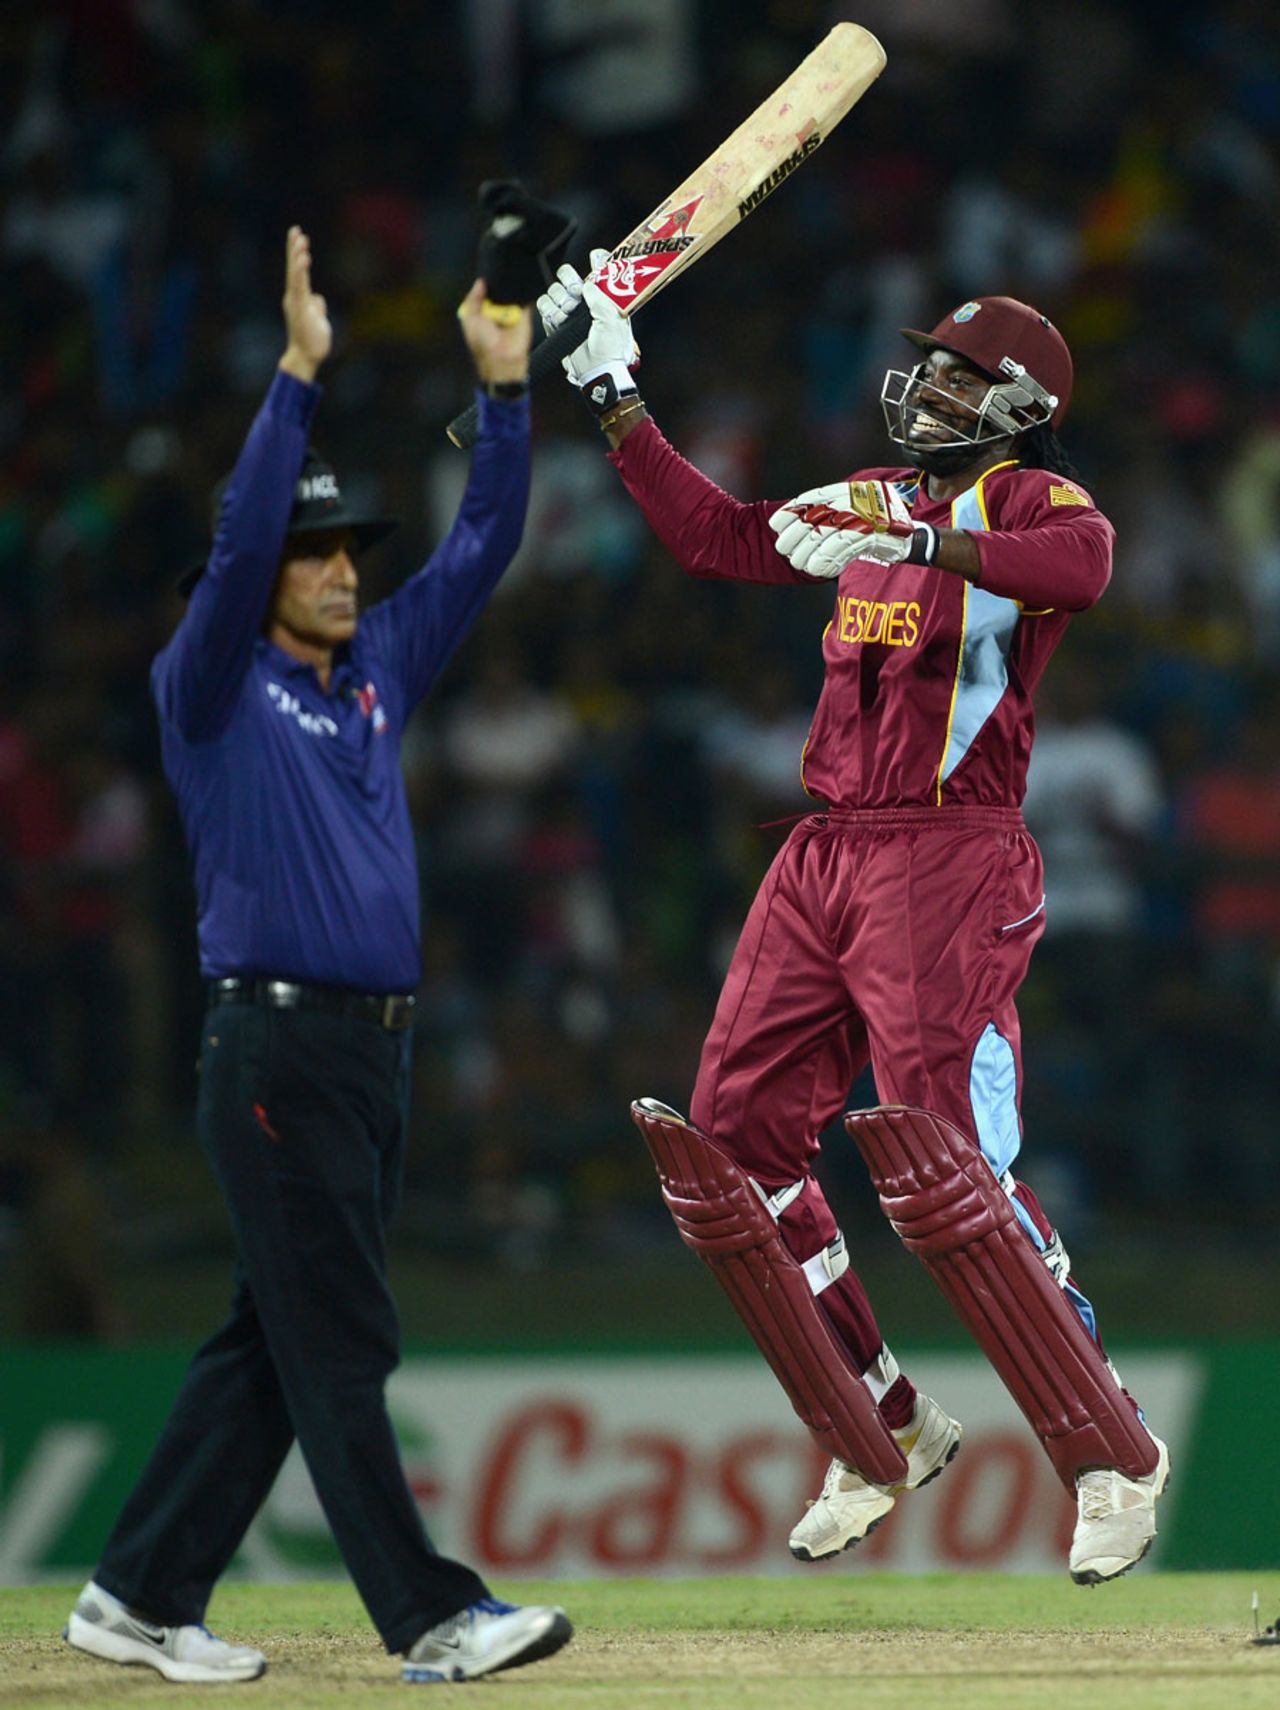 Chris Gayle sets off in celebration as West Indies win the Super Over, New Zealand v West Indies, Super Eights, World Twenty20 2012, Pallekele, October 1, 2012